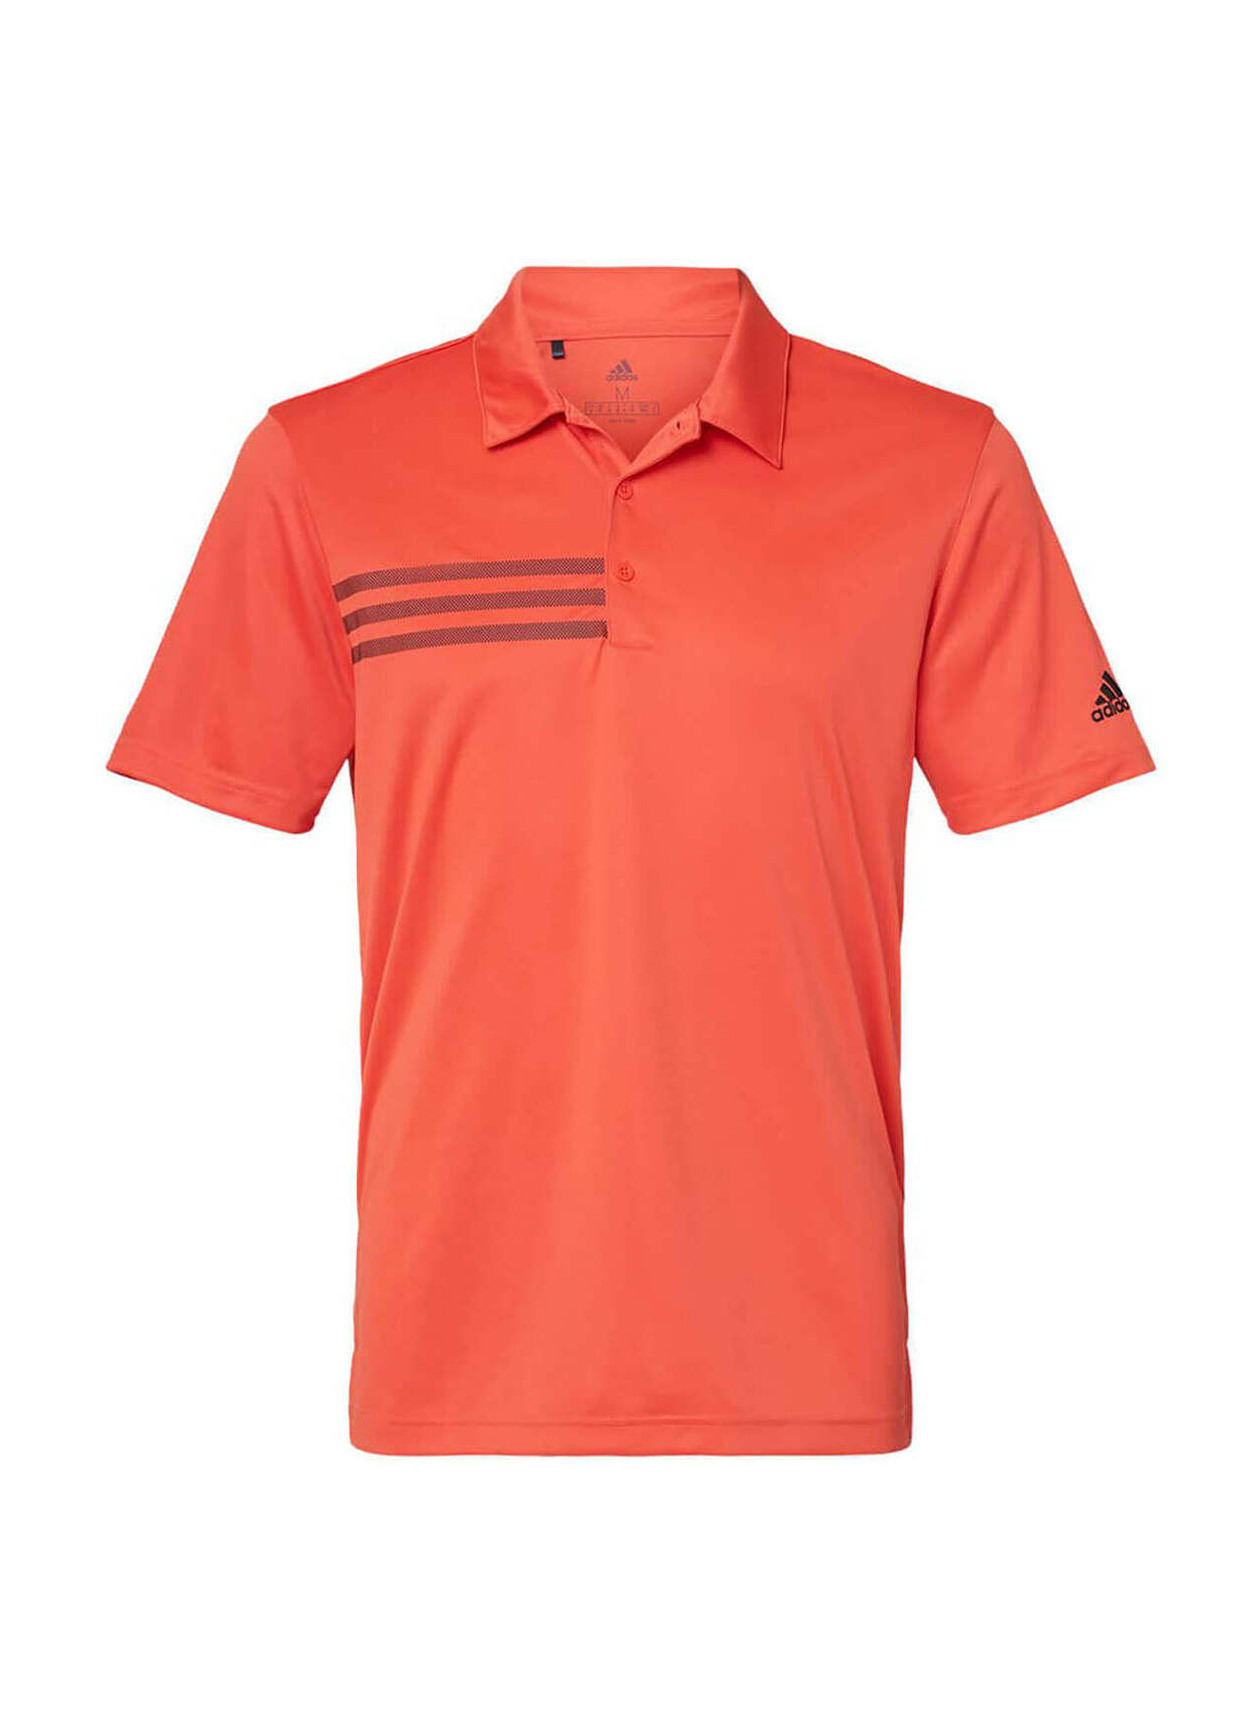 Adidas Men's Blaze Orange-Black 3-Stripes Chest Polo | Custom ...